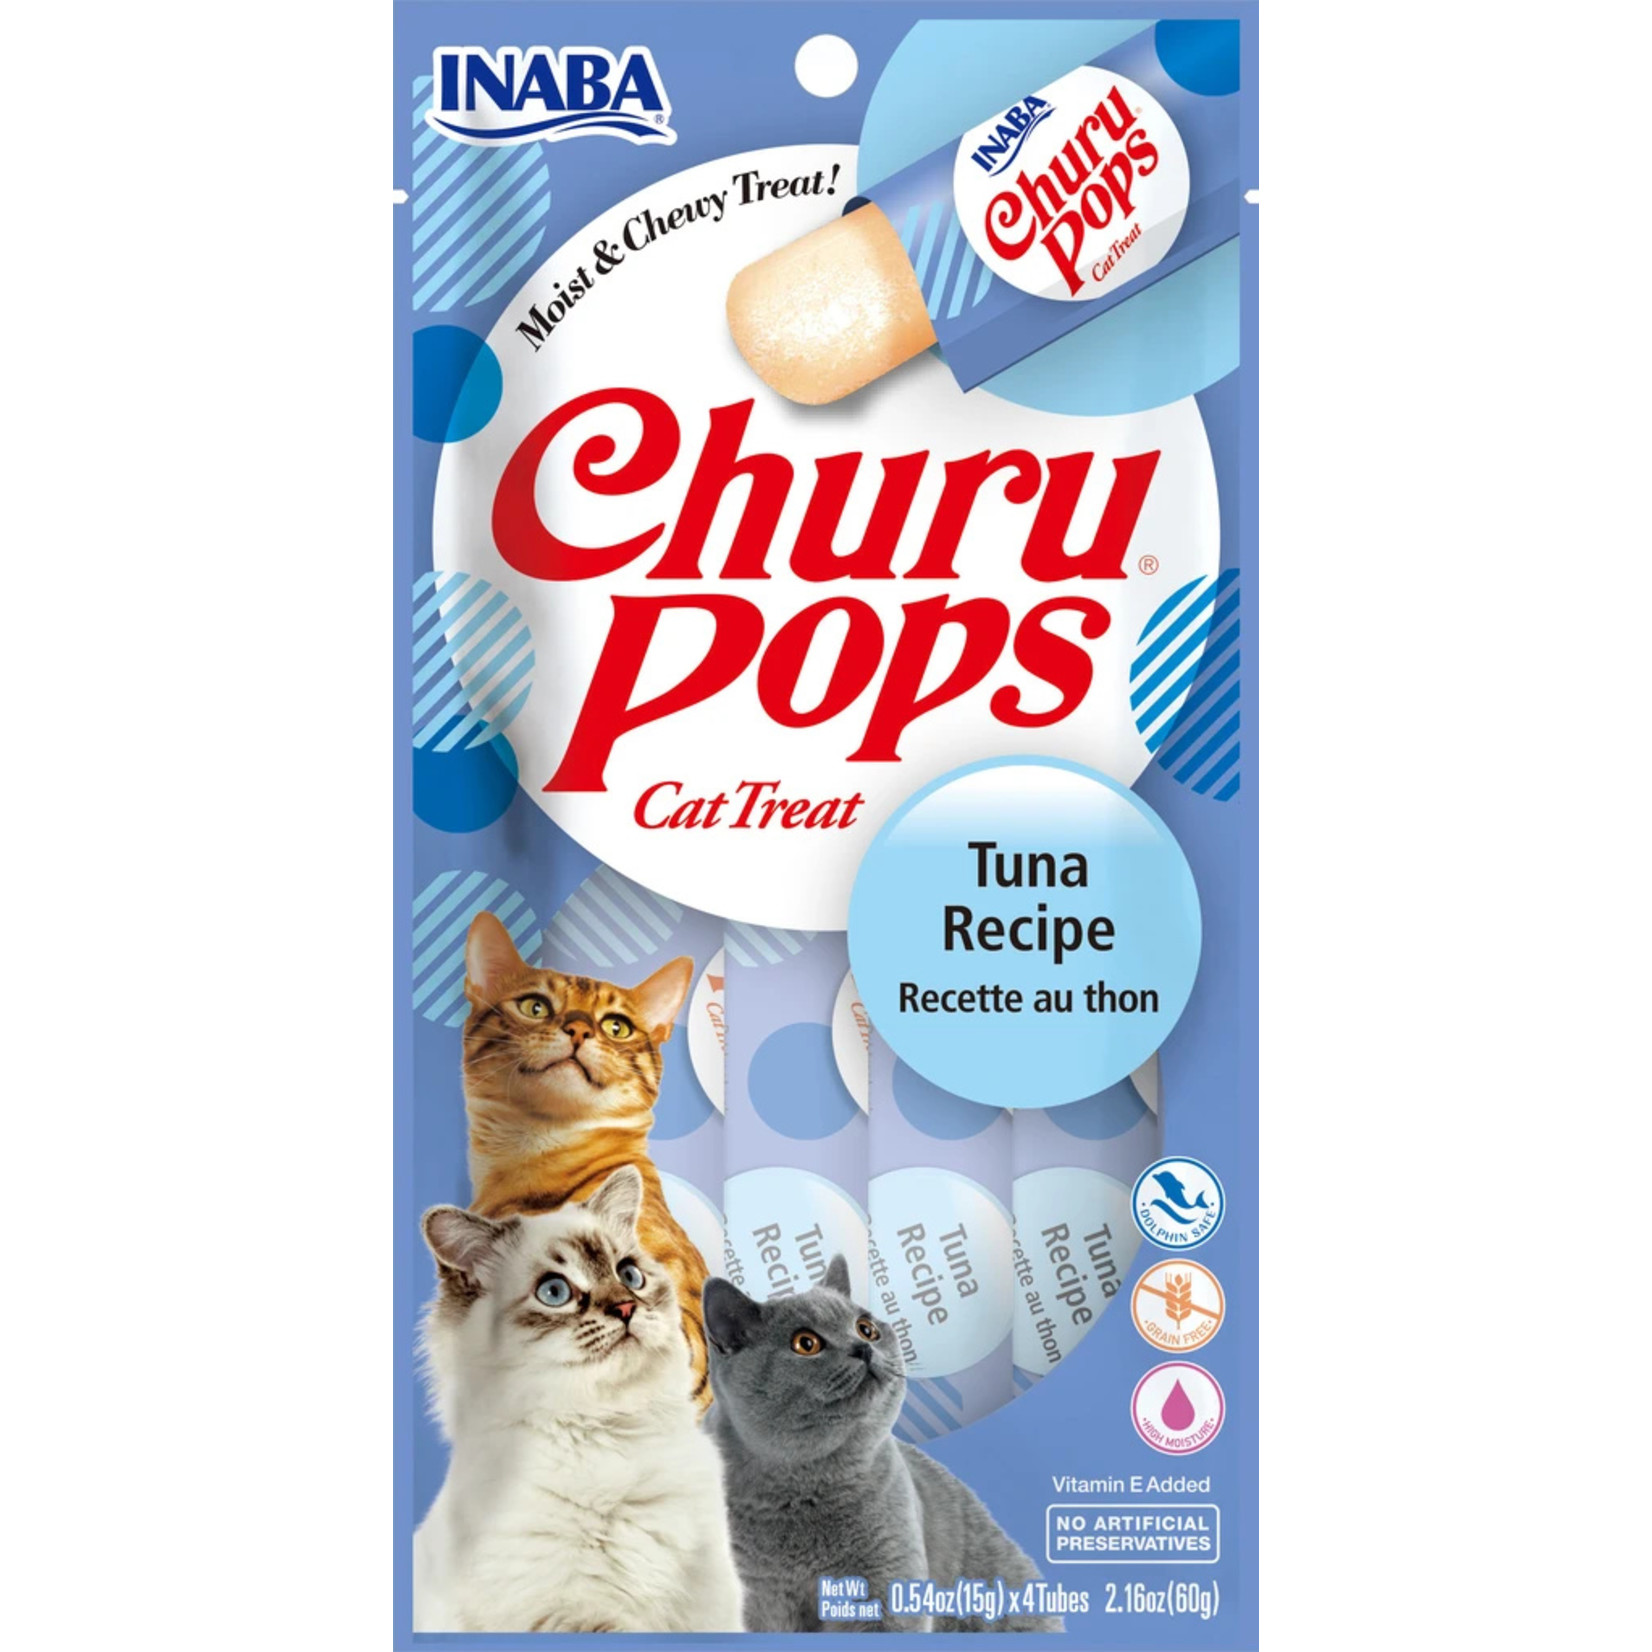 Inaba Inaba Churu Pops - Tuna Recipe for Cats